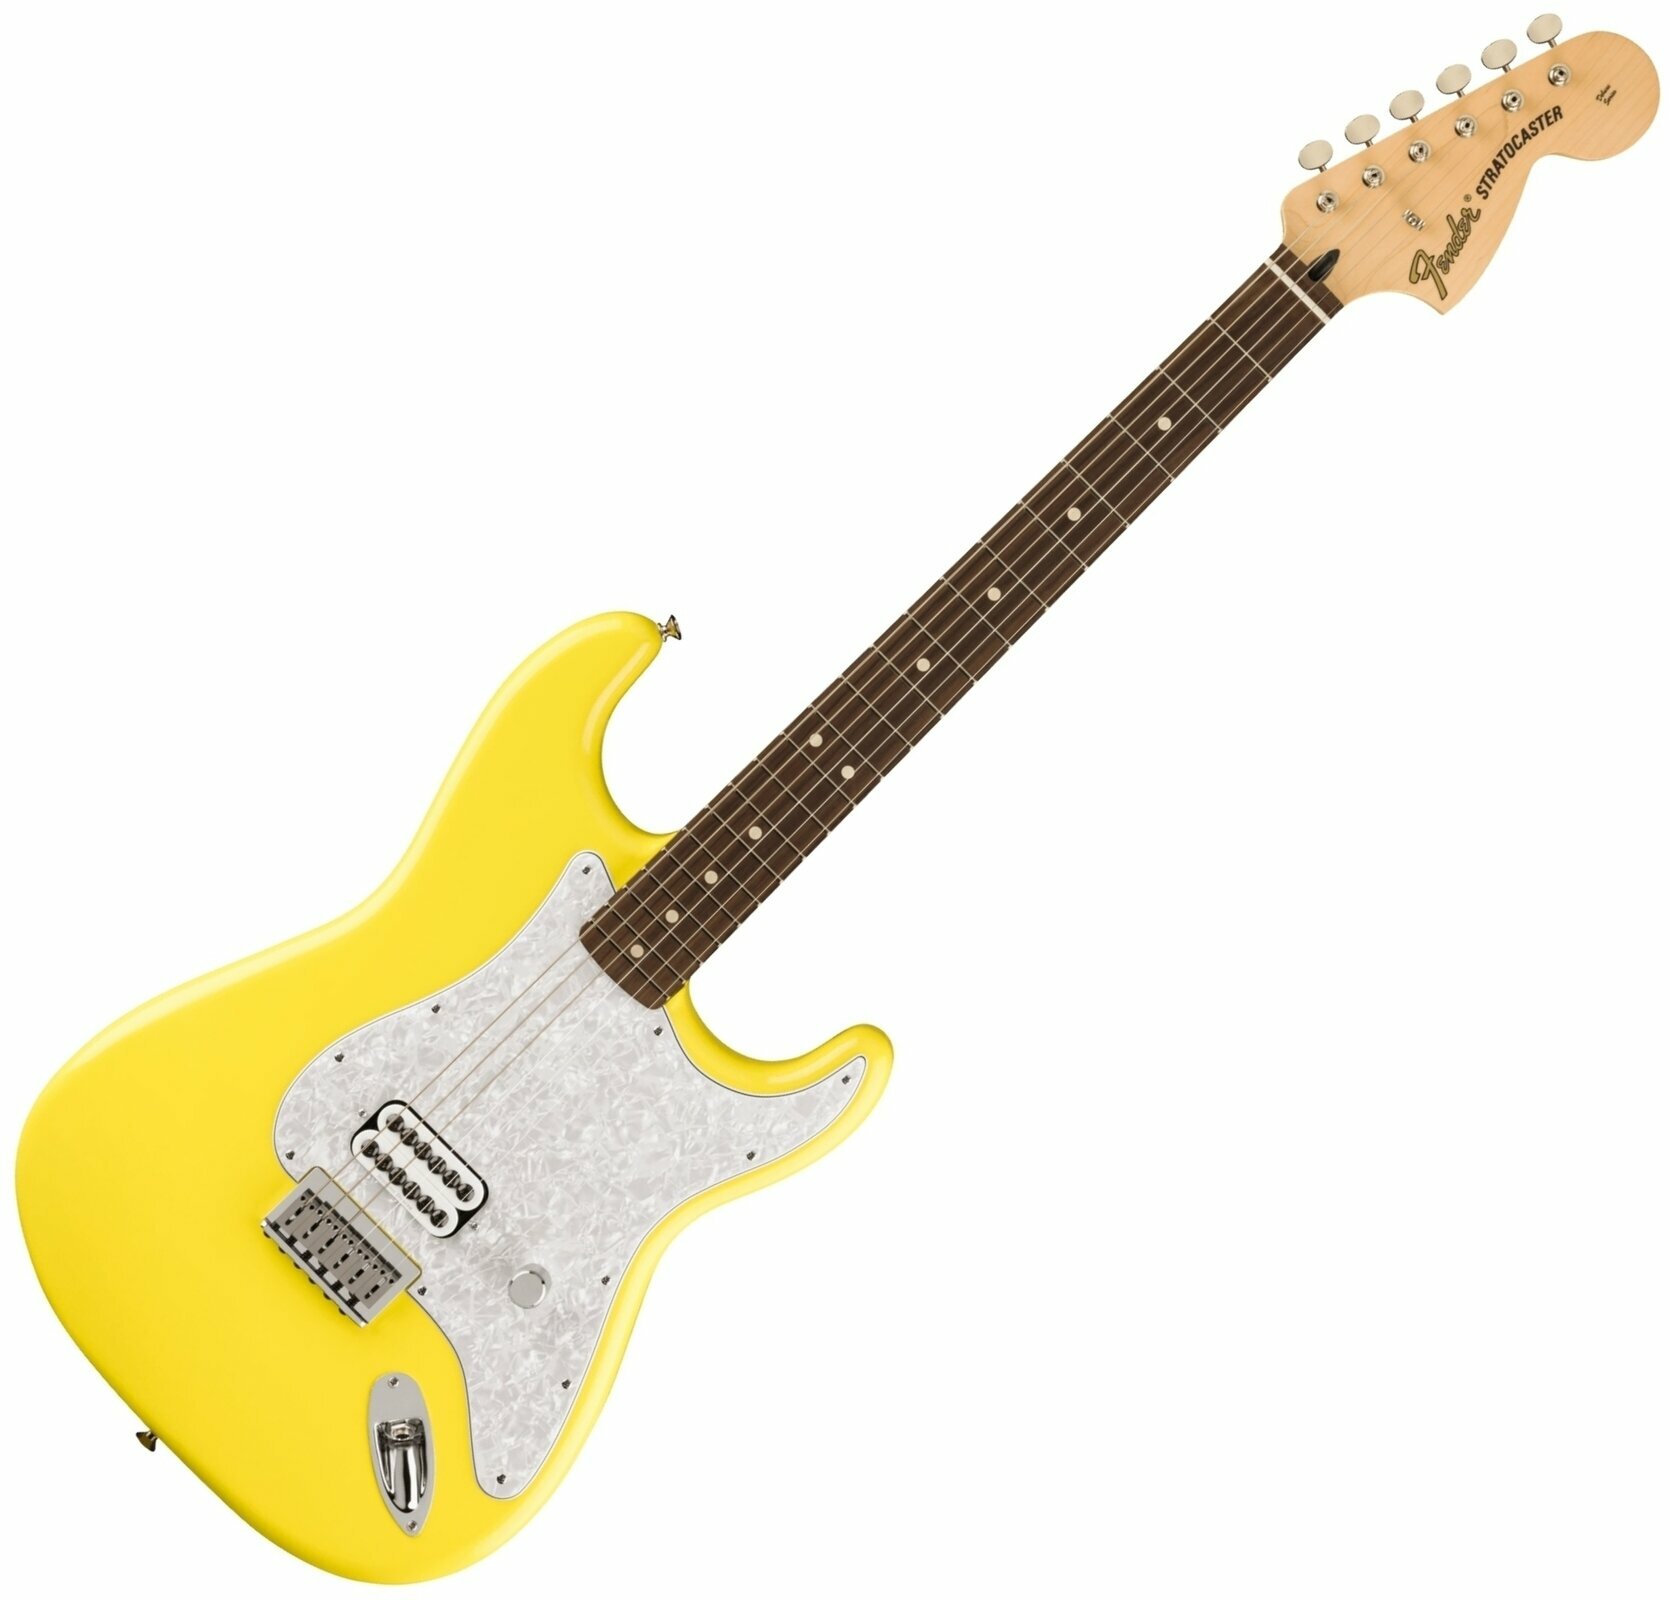 Photos - Guitar Fender Limited Edition Tom Delonge Stratocaster Graffiti Yellow 014 